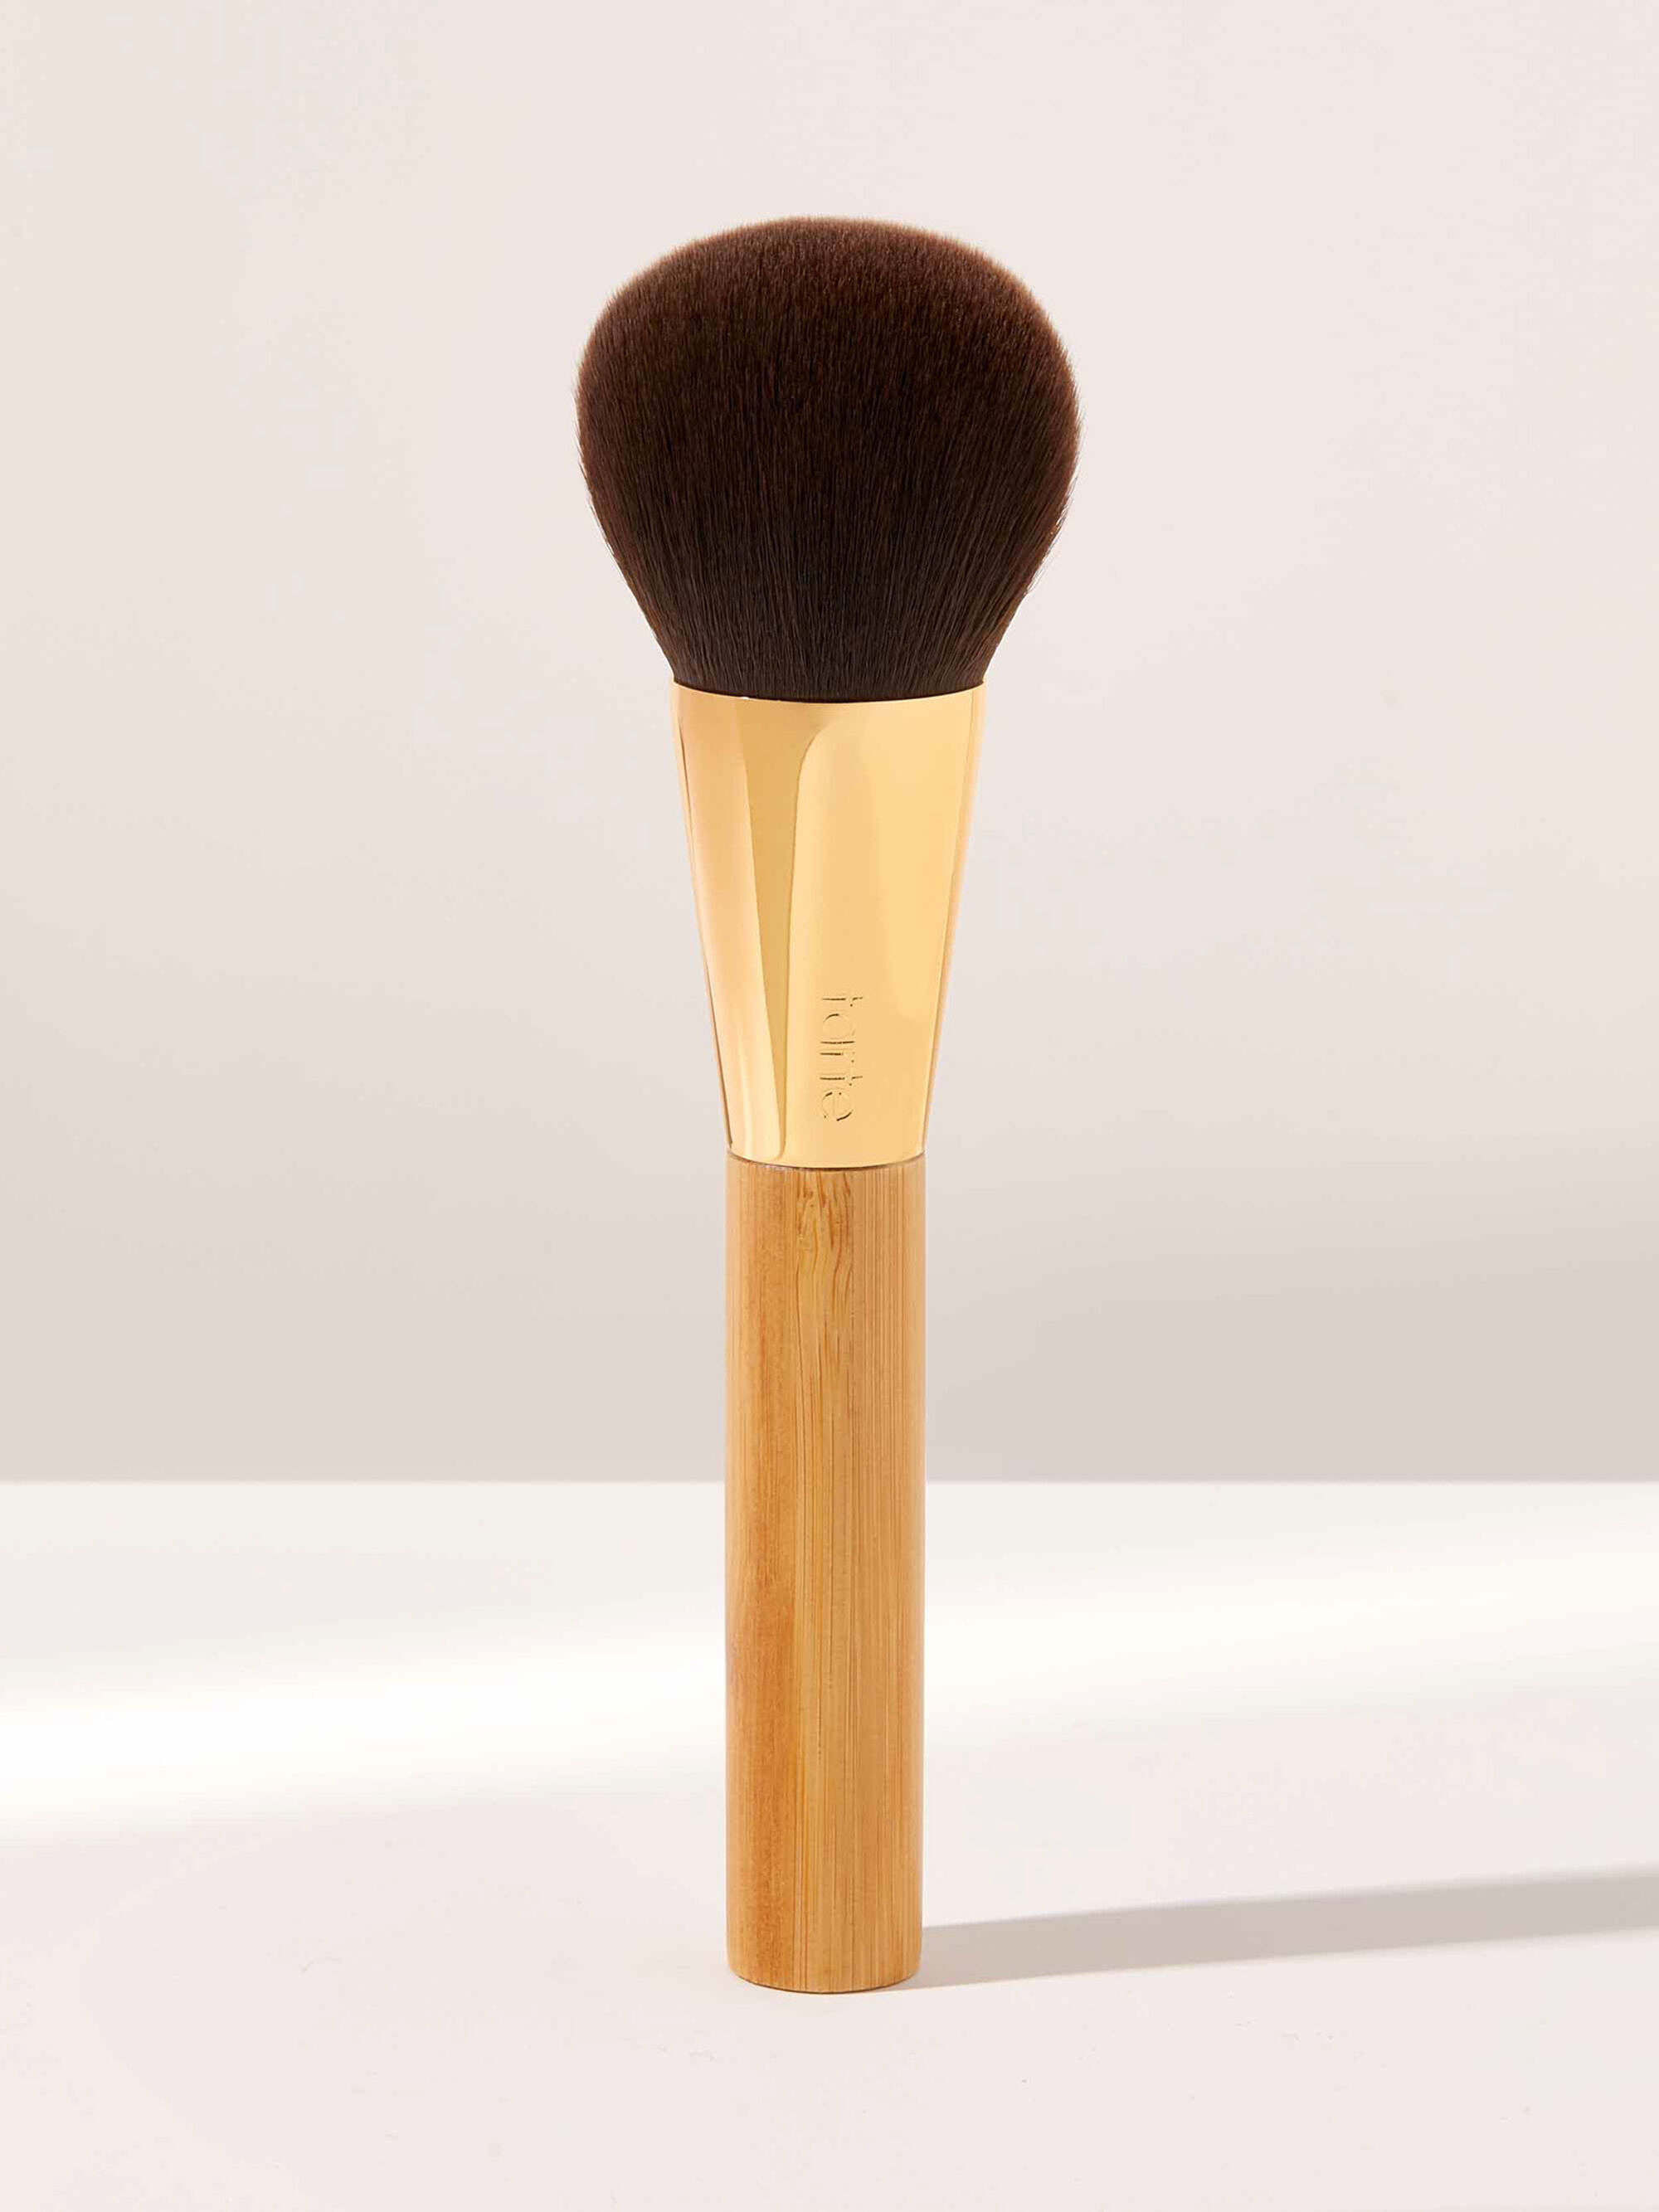 A brown powder brush